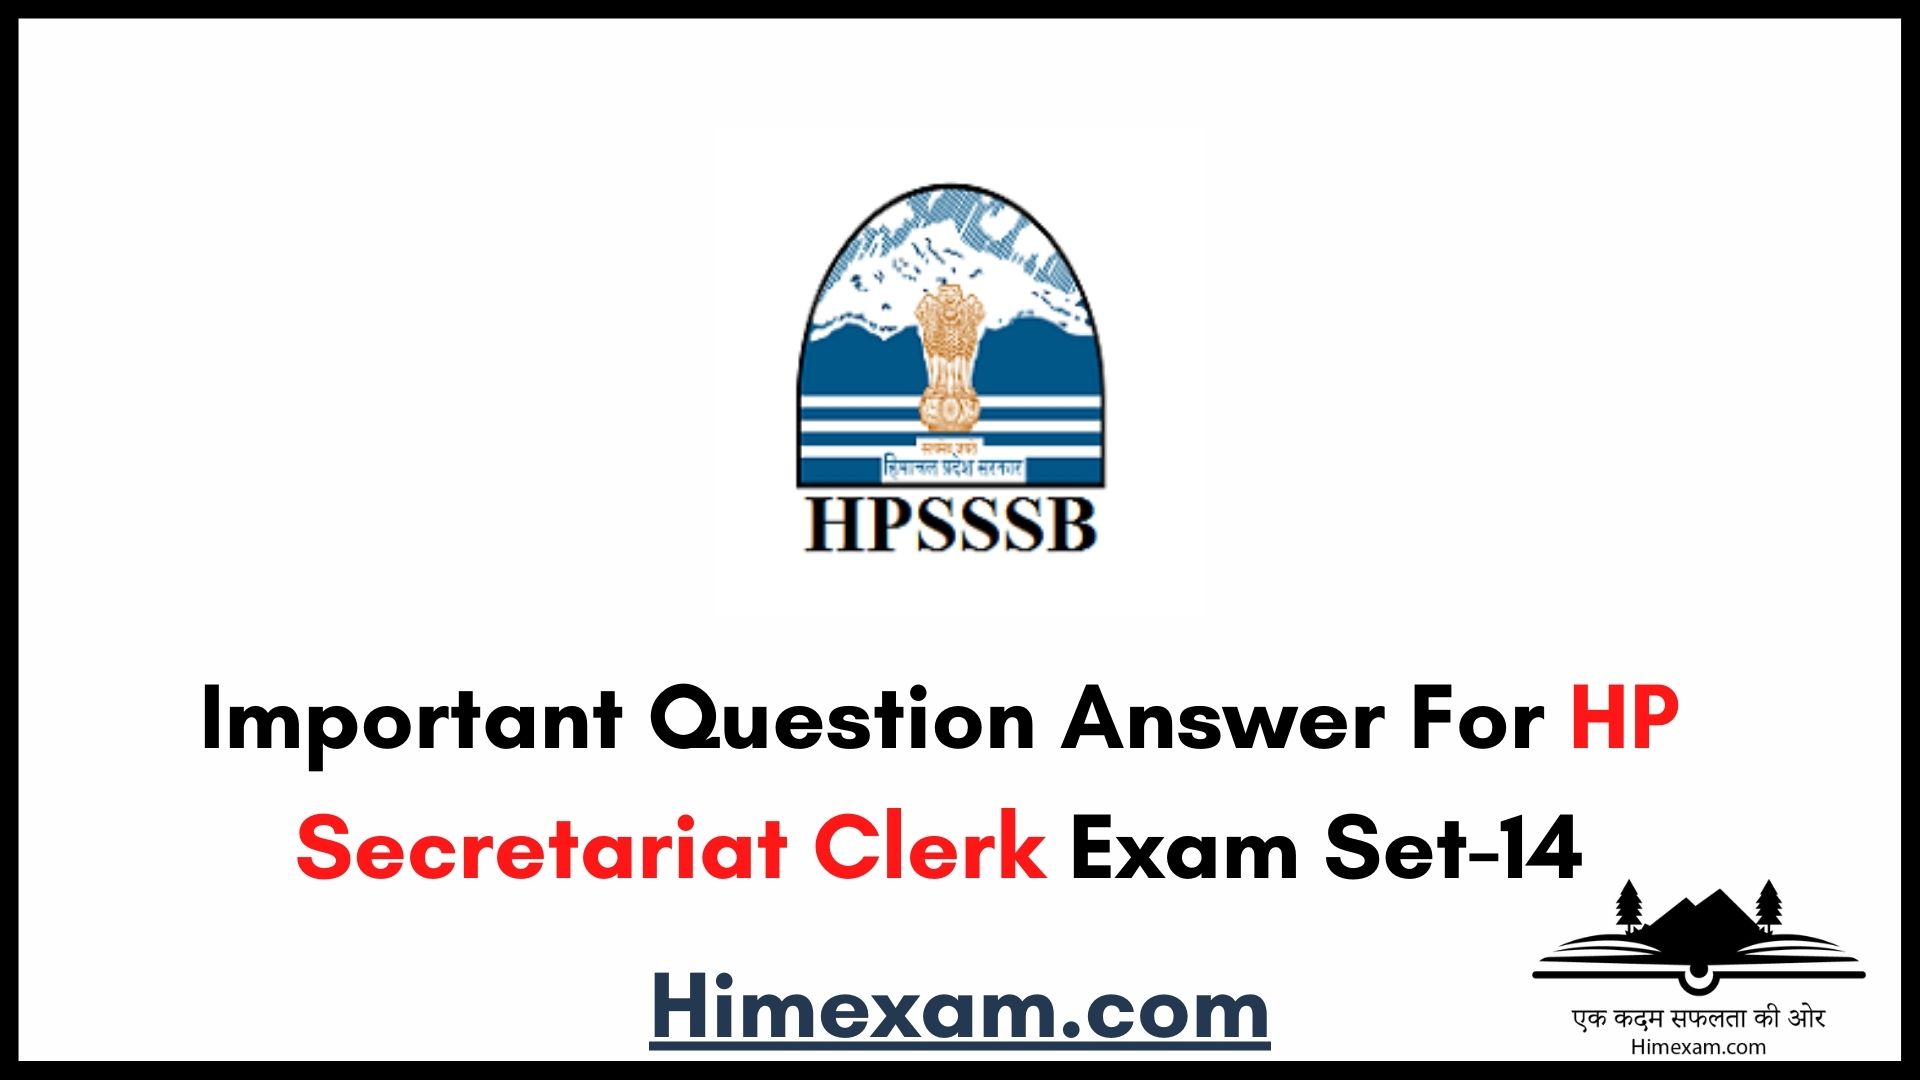 Important Question Answer For HP Secretariat Clerk Exam Set-14